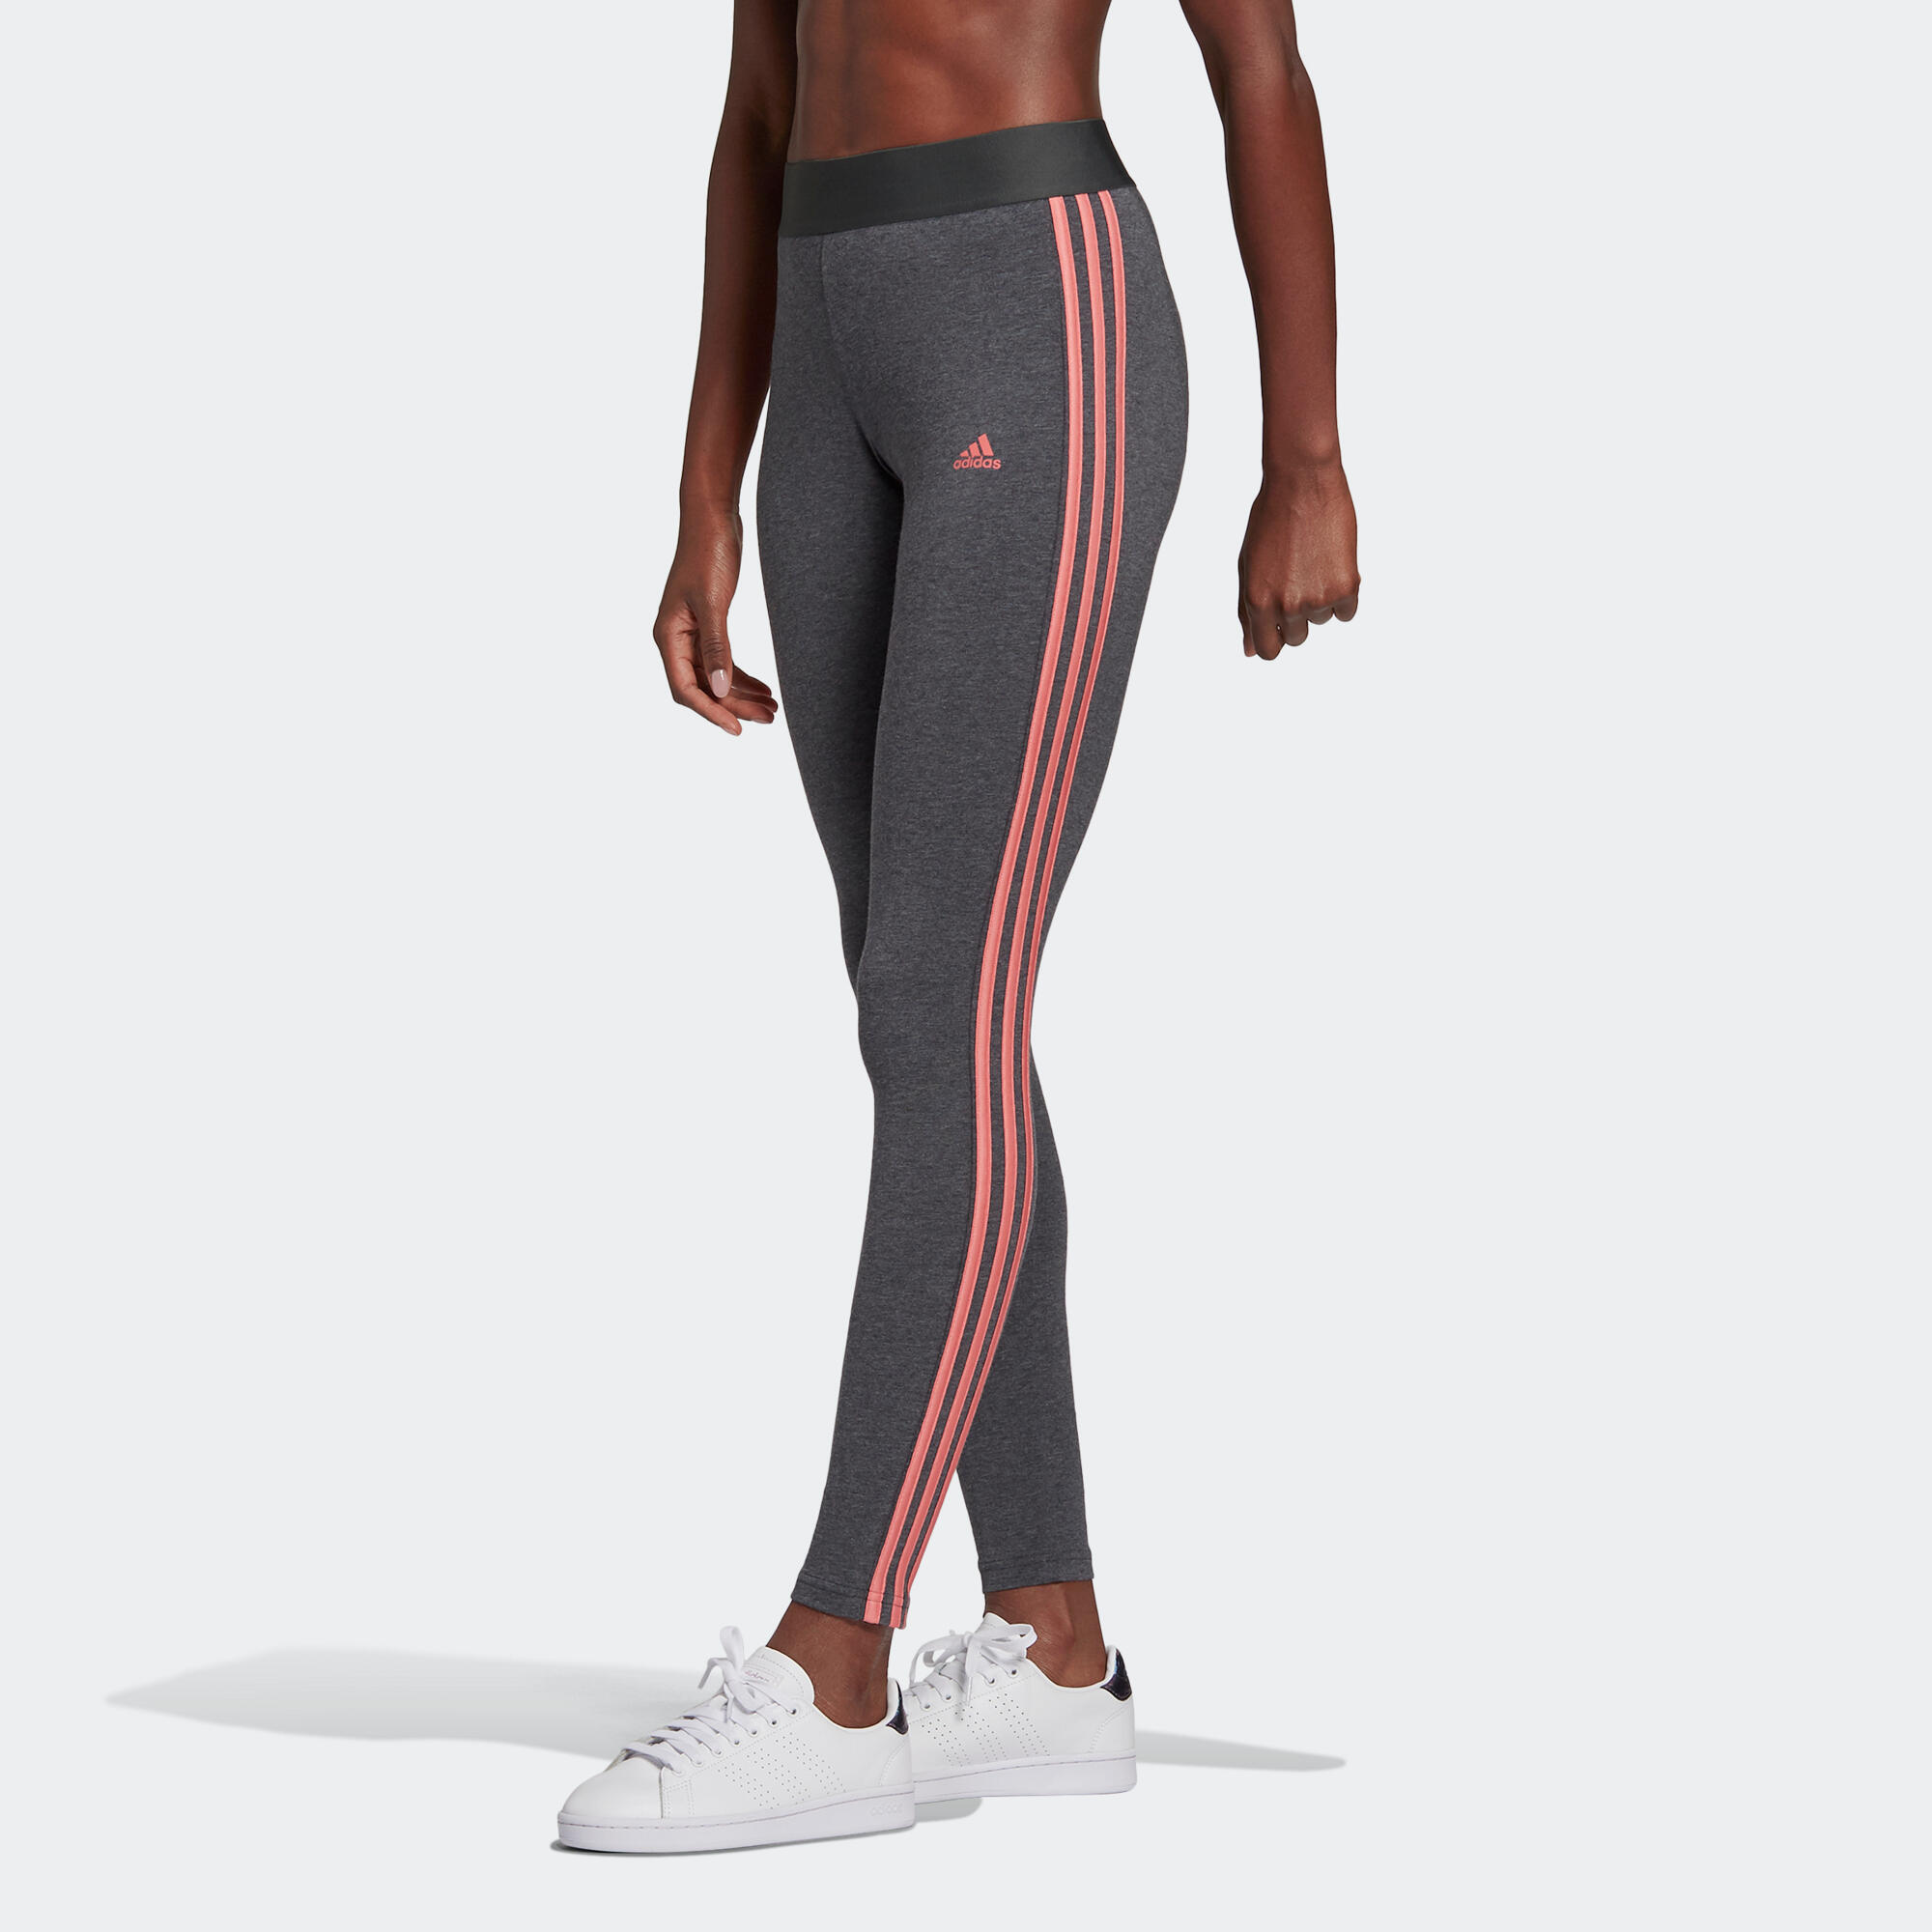 decathlon adidas leggings